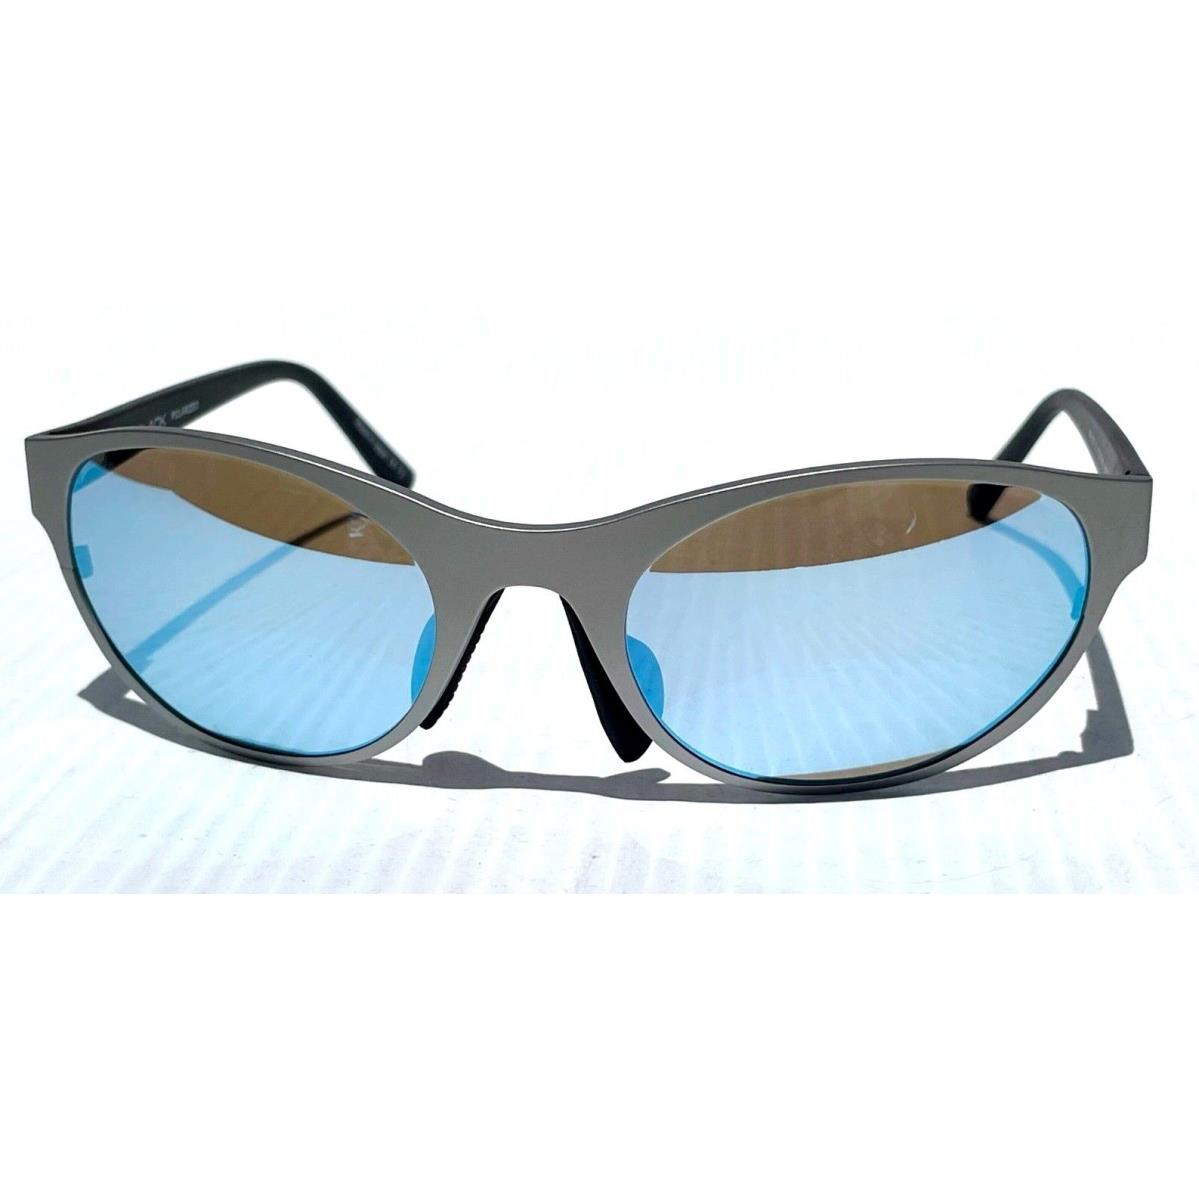 Revo sunglasses ICON Oval - Silver Frame, Blue Lens